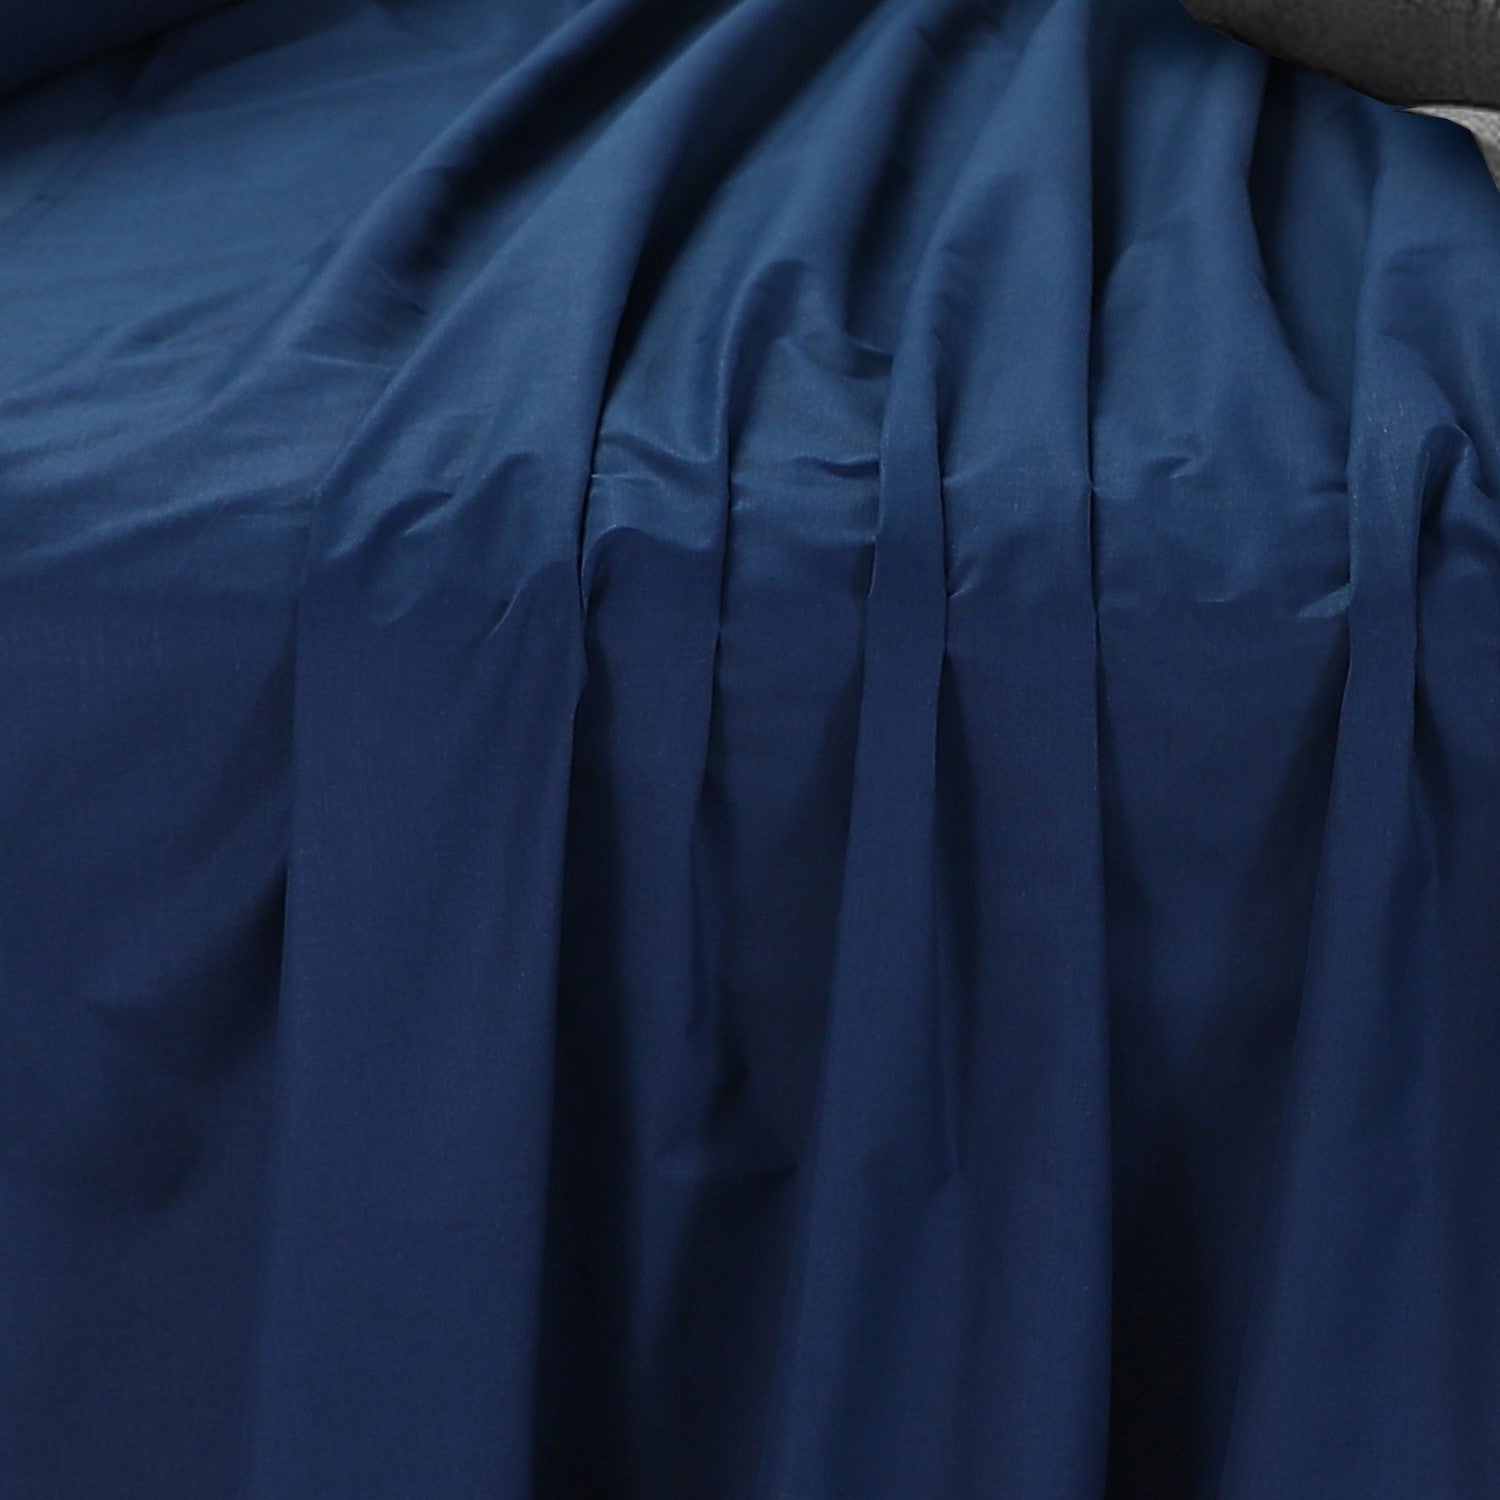 Sheet Set | Deep Blue Bed Sheet with Pillow Covers